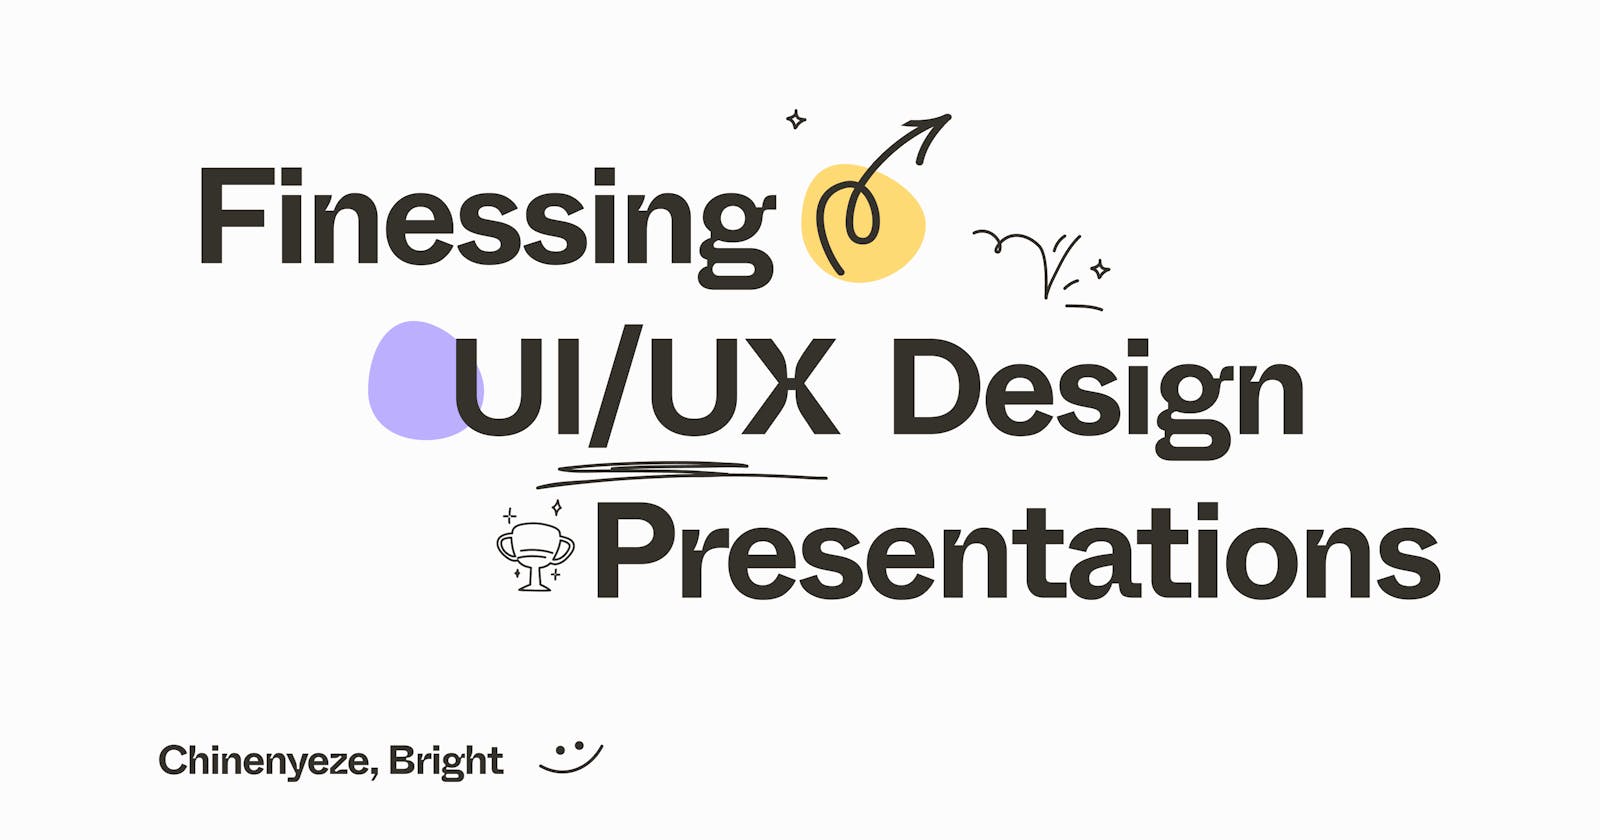 Finessing UI/UX design presentations